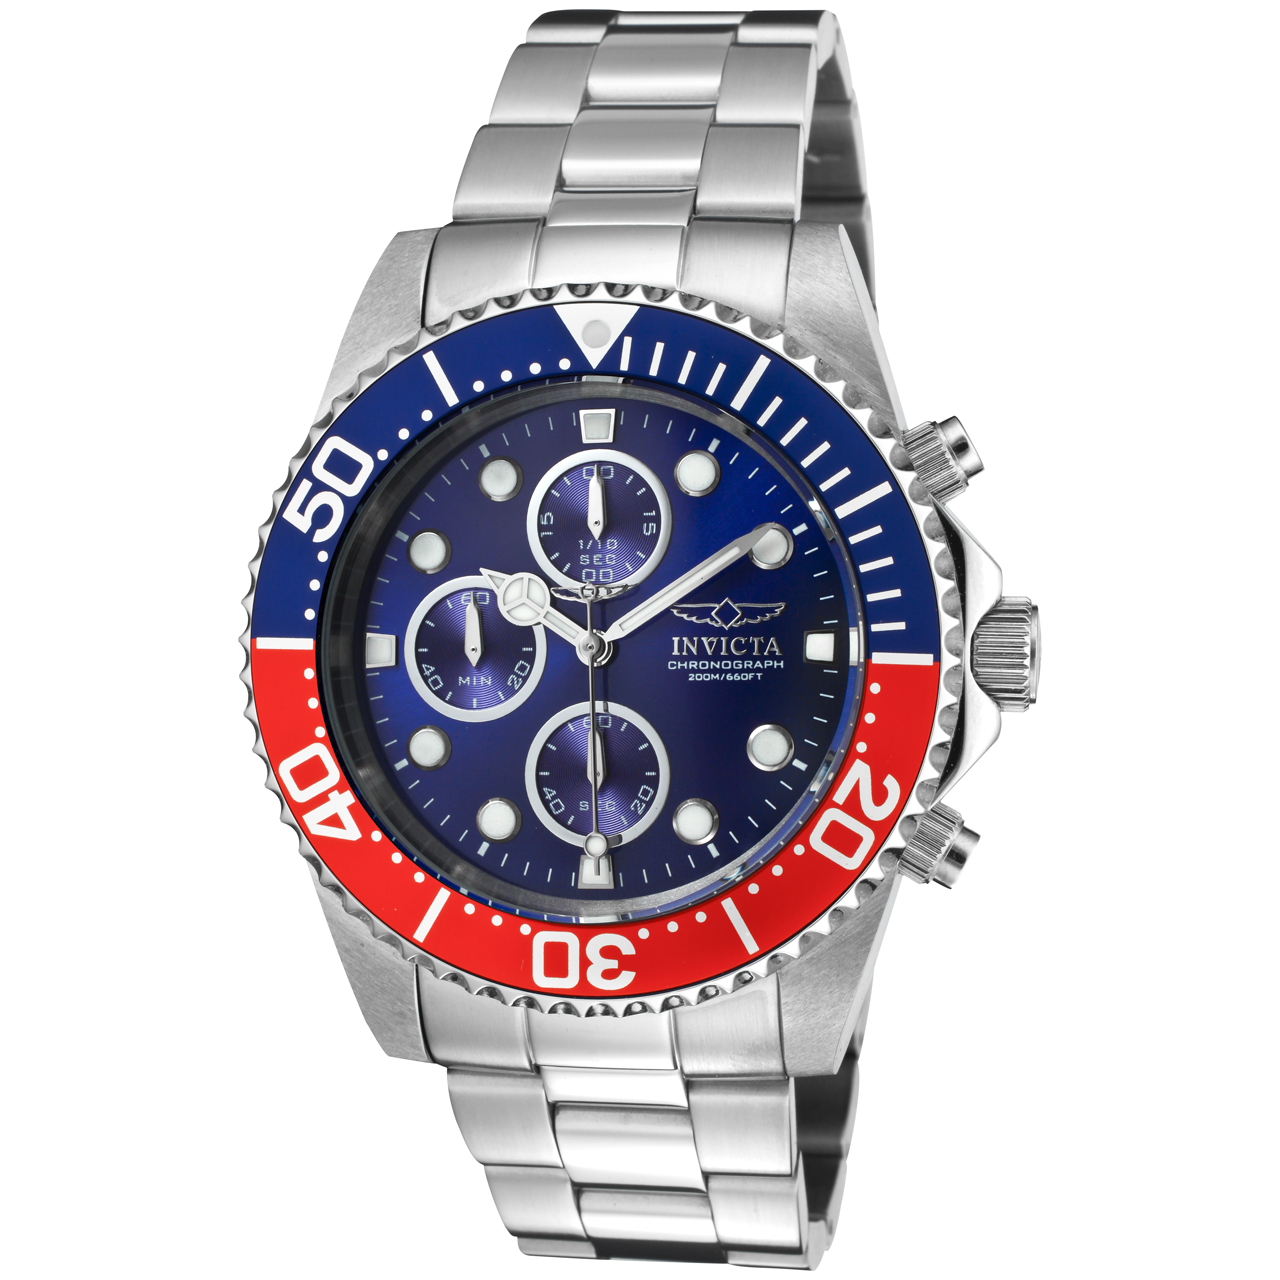 trug Merchandising liter Invicta Pro Diver Men's Watches (Mod: 1771) | Invicta Watches